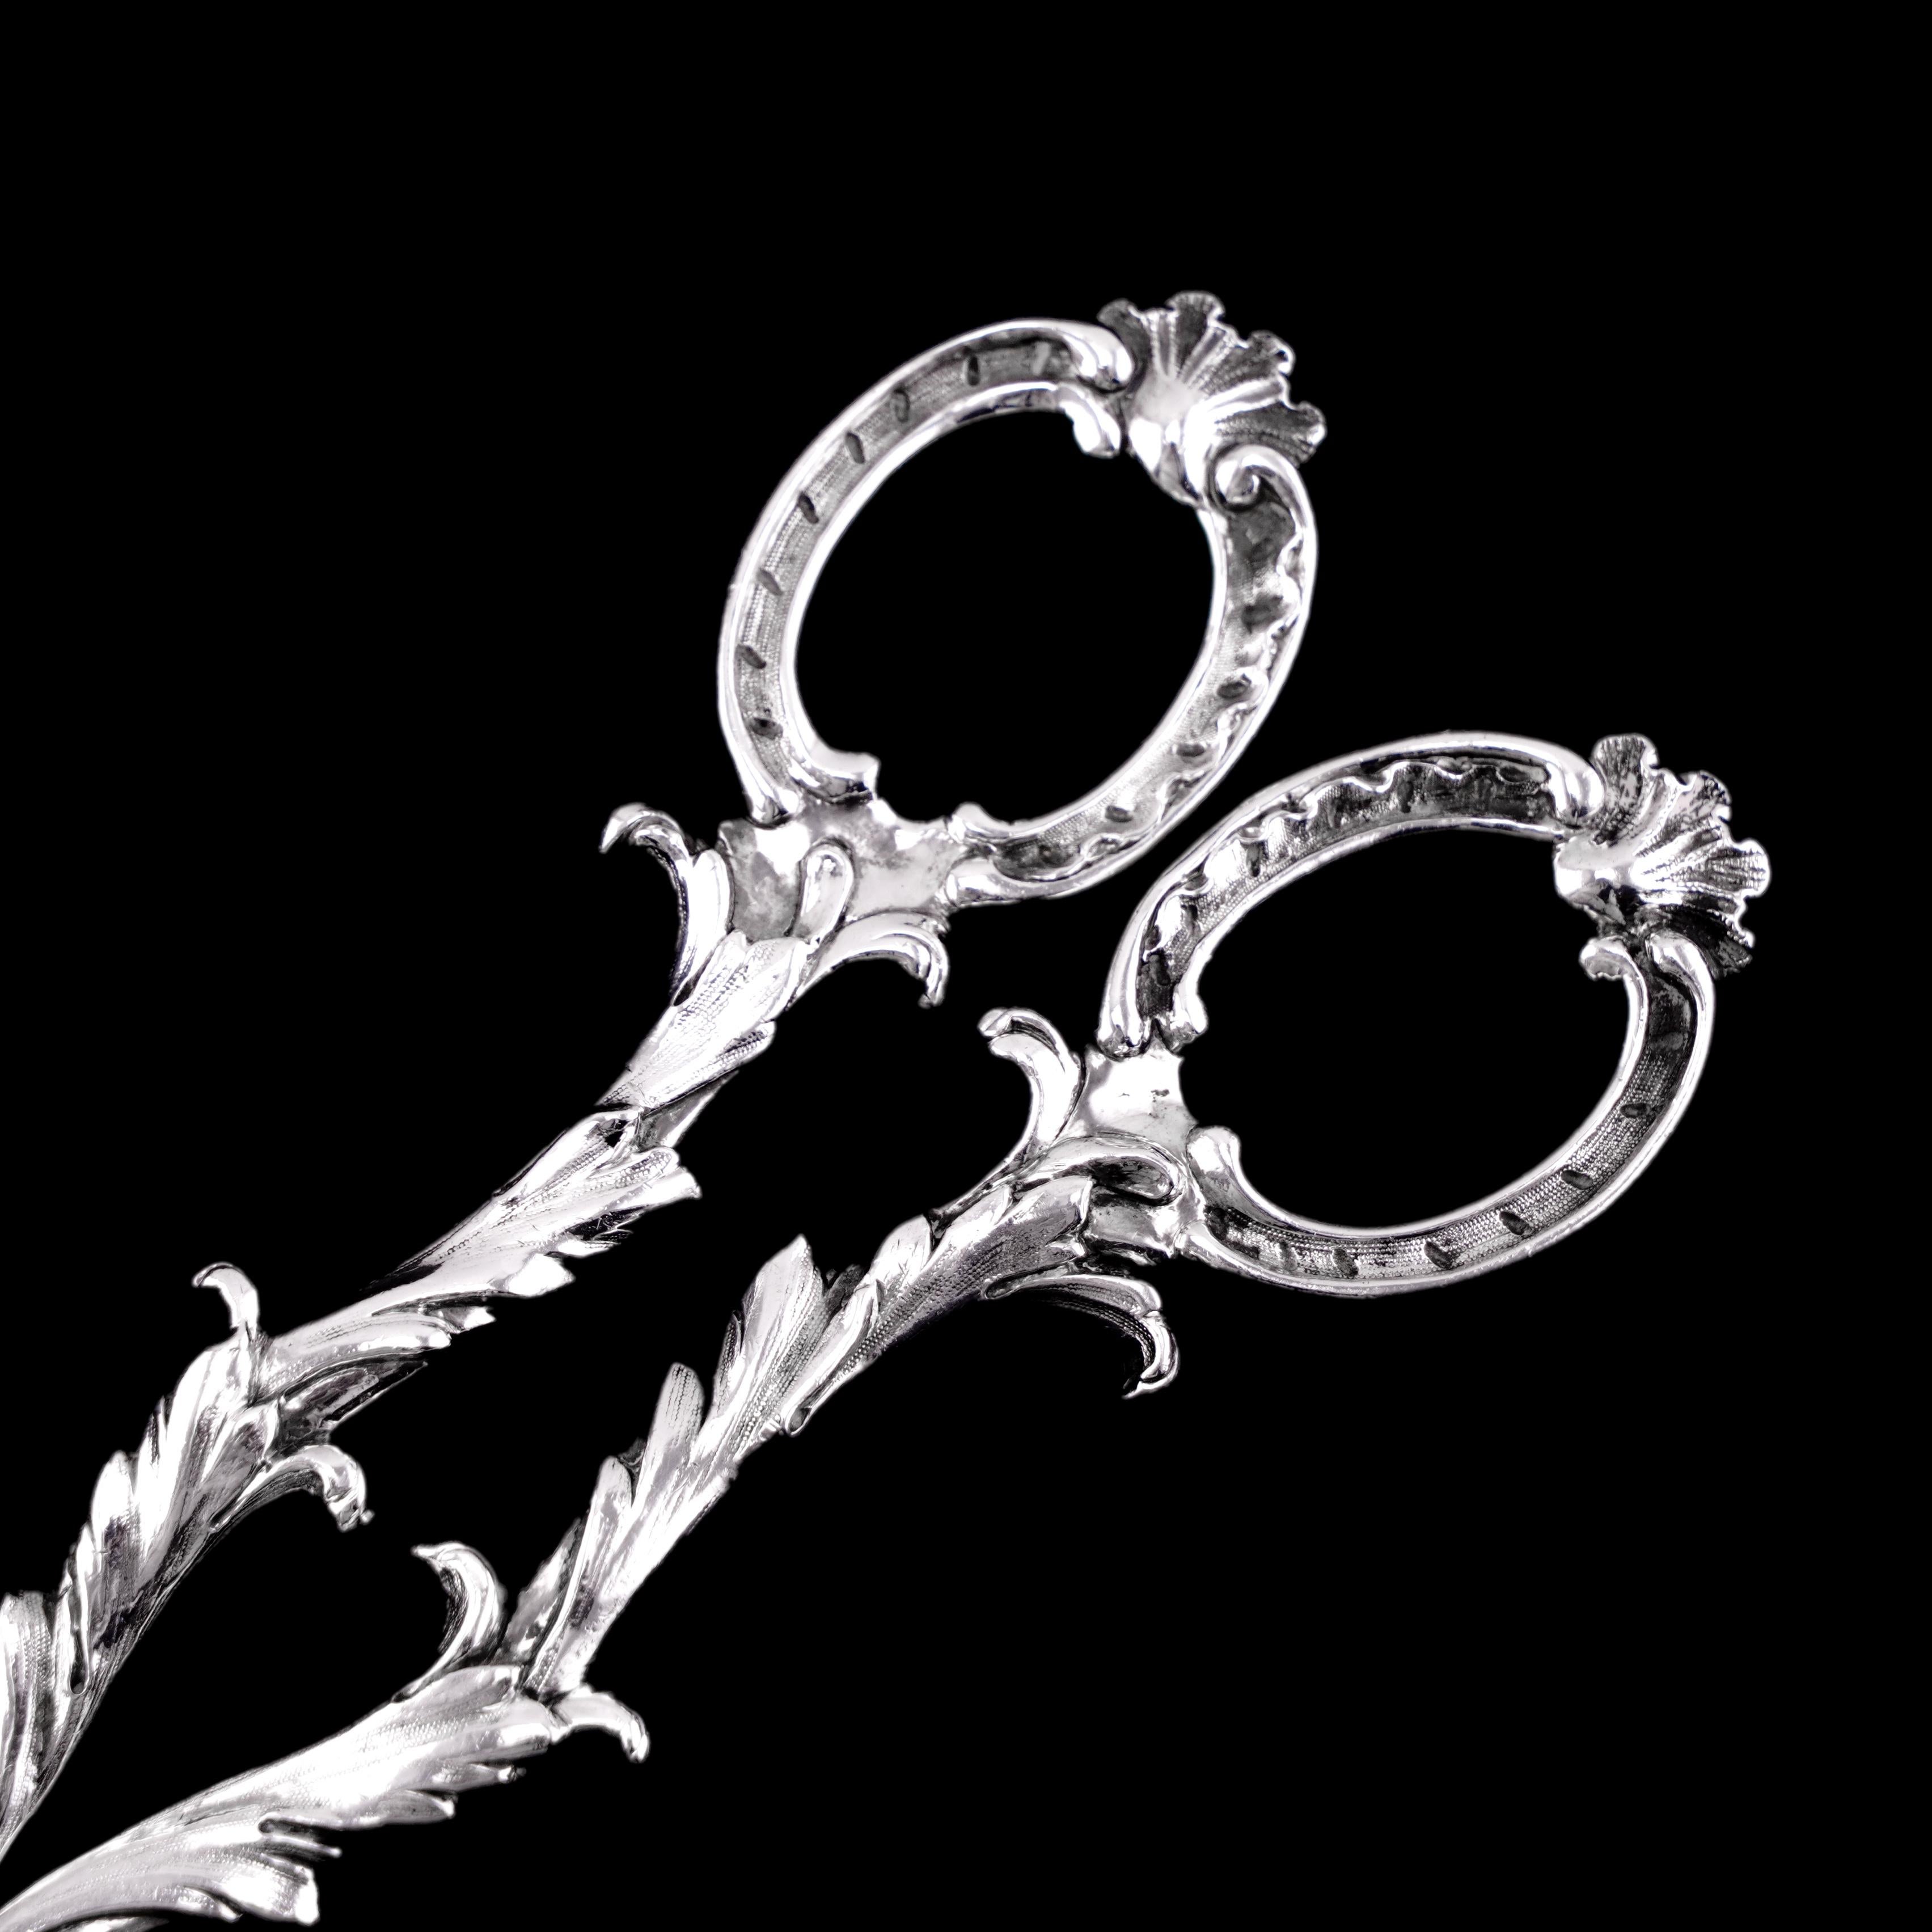 Antique Victorian Solid Silver Scissors/Grape Shears Cast Acanthus Design 1846 For Sale 3